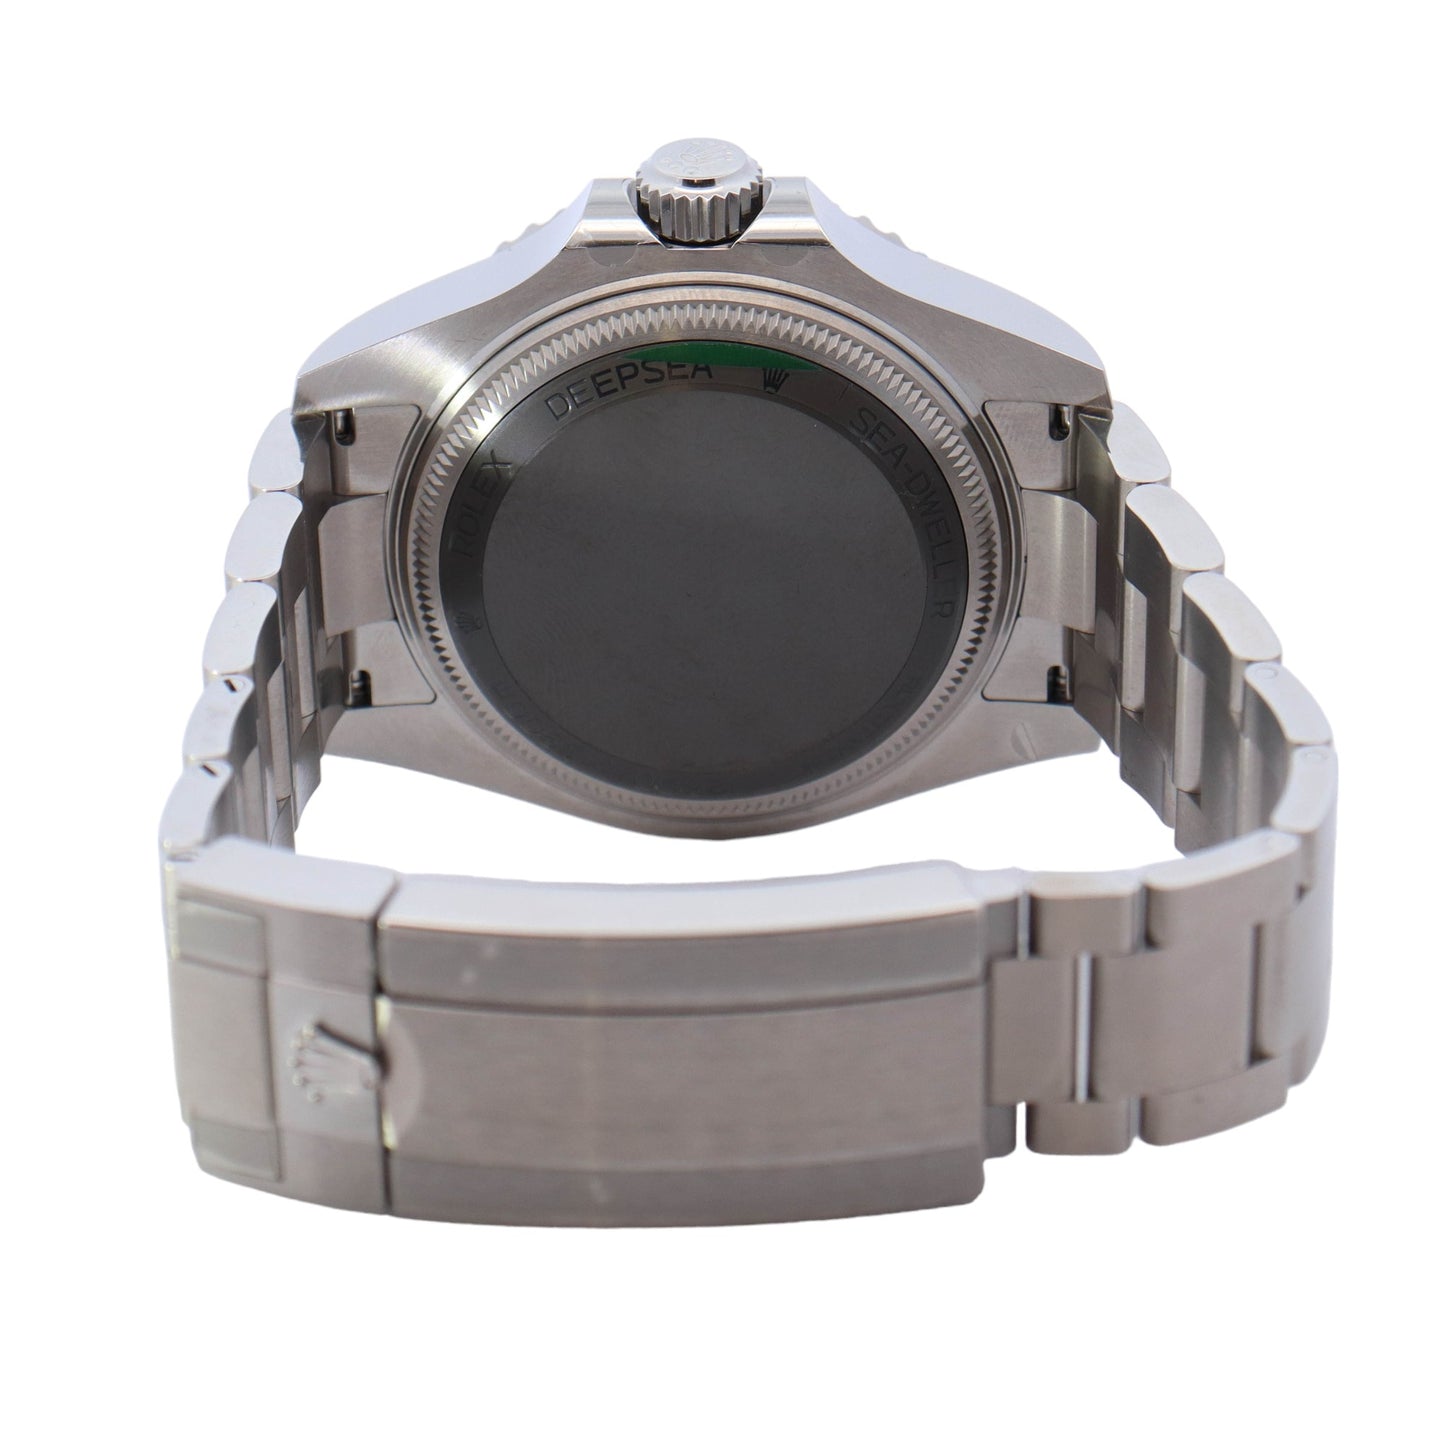 Rolex Sea-Dweller Deepsea "James Cameron" Stainless Steel 44mm Blue/Black Dot Dial Watch Reference# 136660 - Happy Jewelers Fine Jewelry Lifetime Warranty